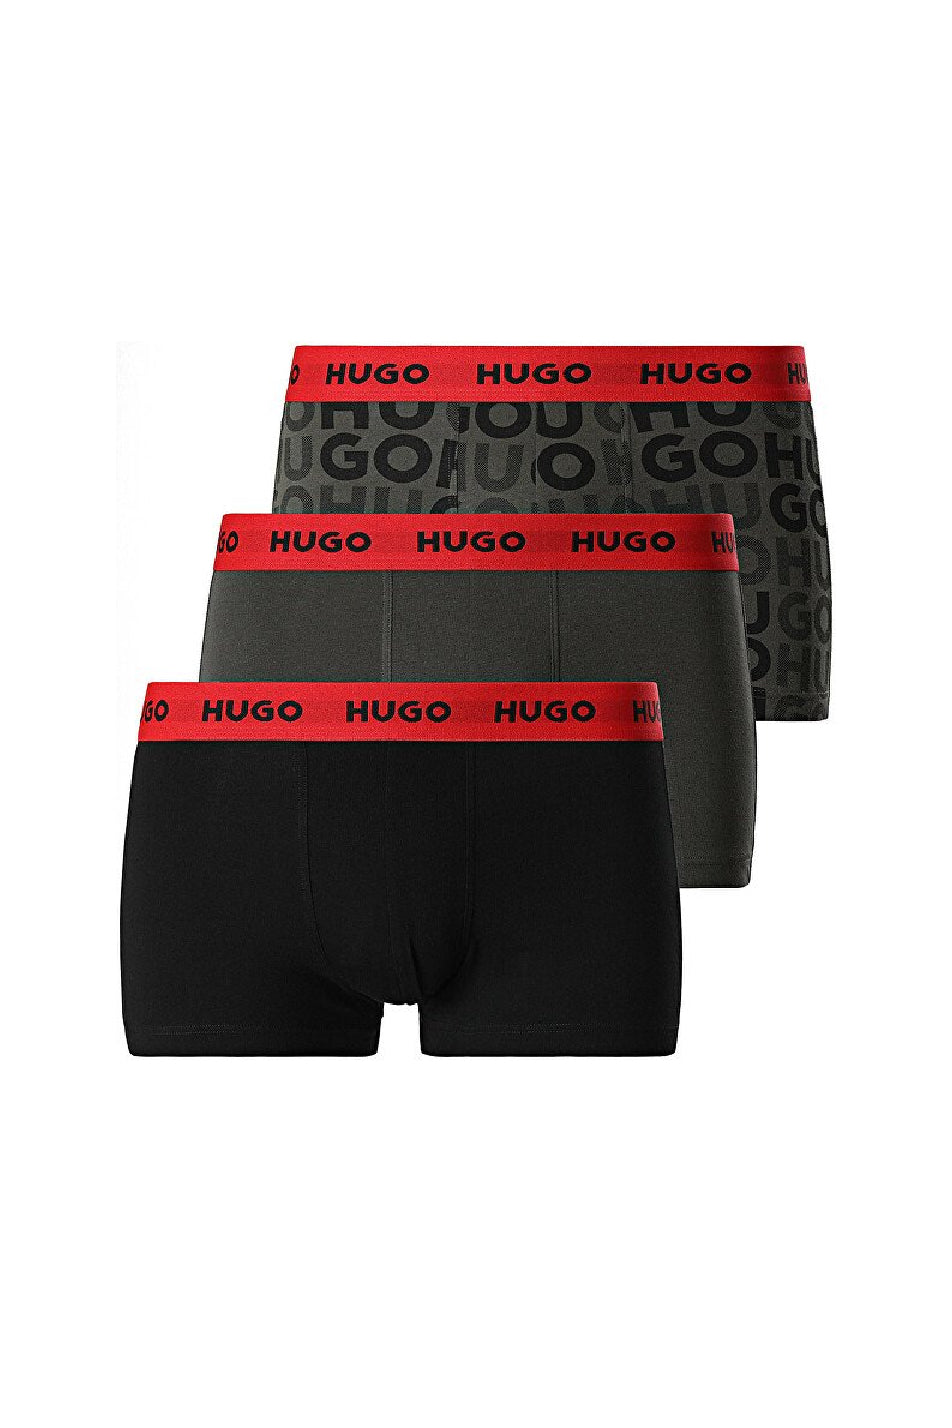 HUGO Men's 3 Pack Triplet Design Trunk